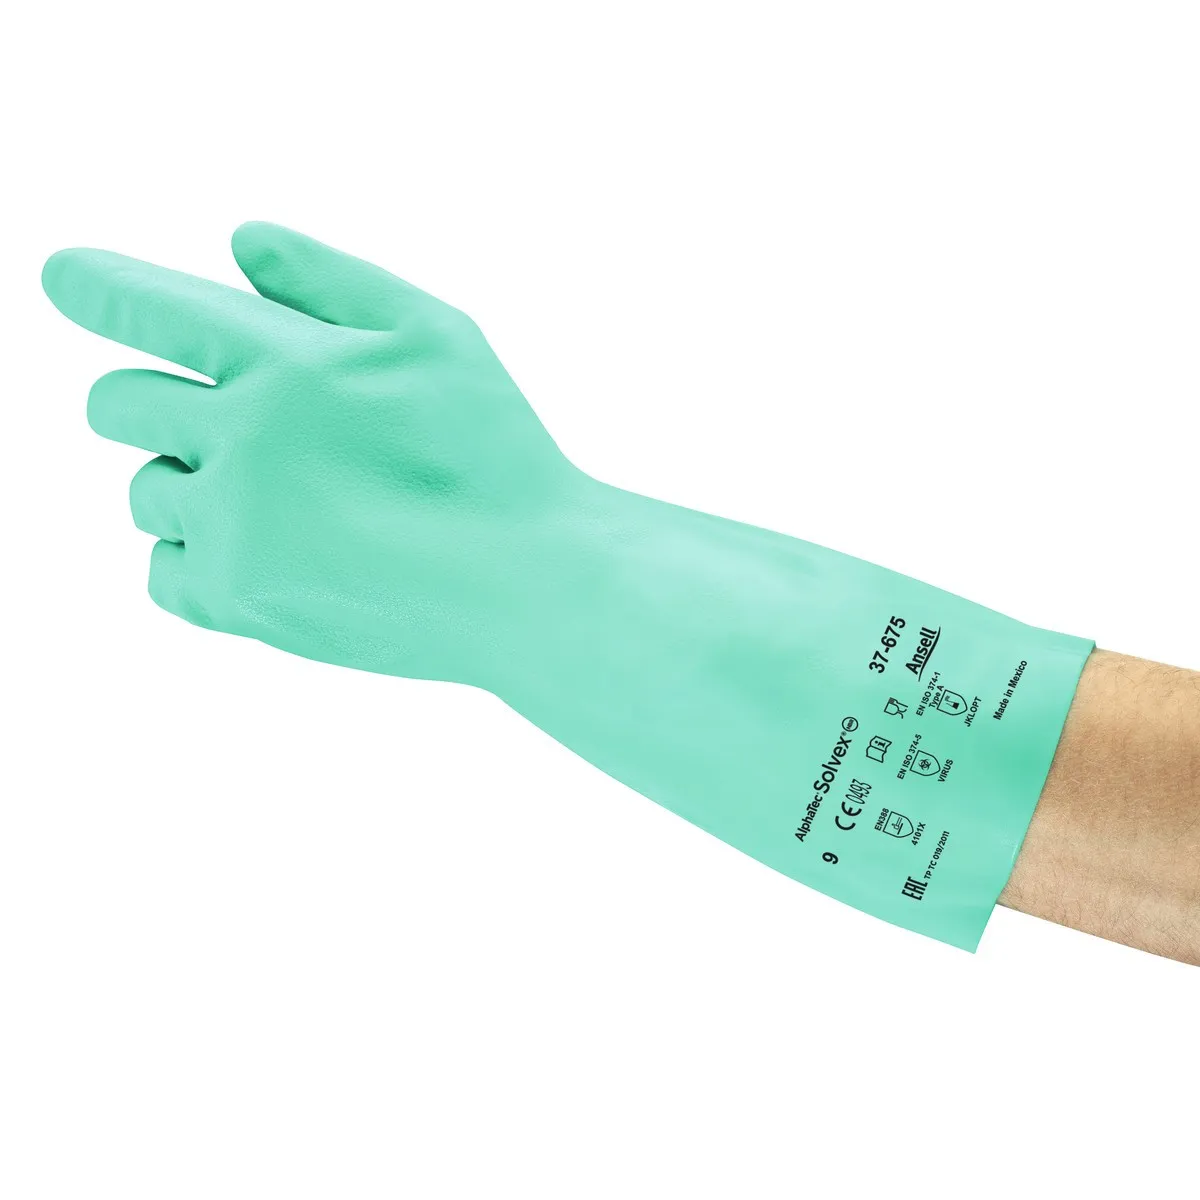 Zaštitne rukavice ALPHATEC 37-675 zelene - Ansell - PAR 